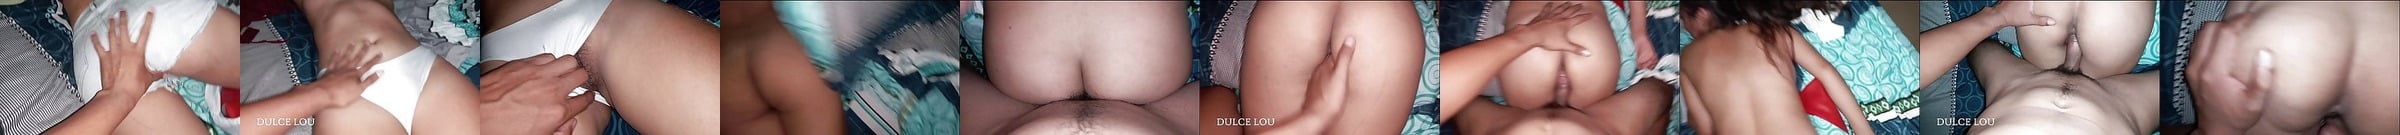 DulceLou Porn Creator Videos Free Amateur Nudes XHamster